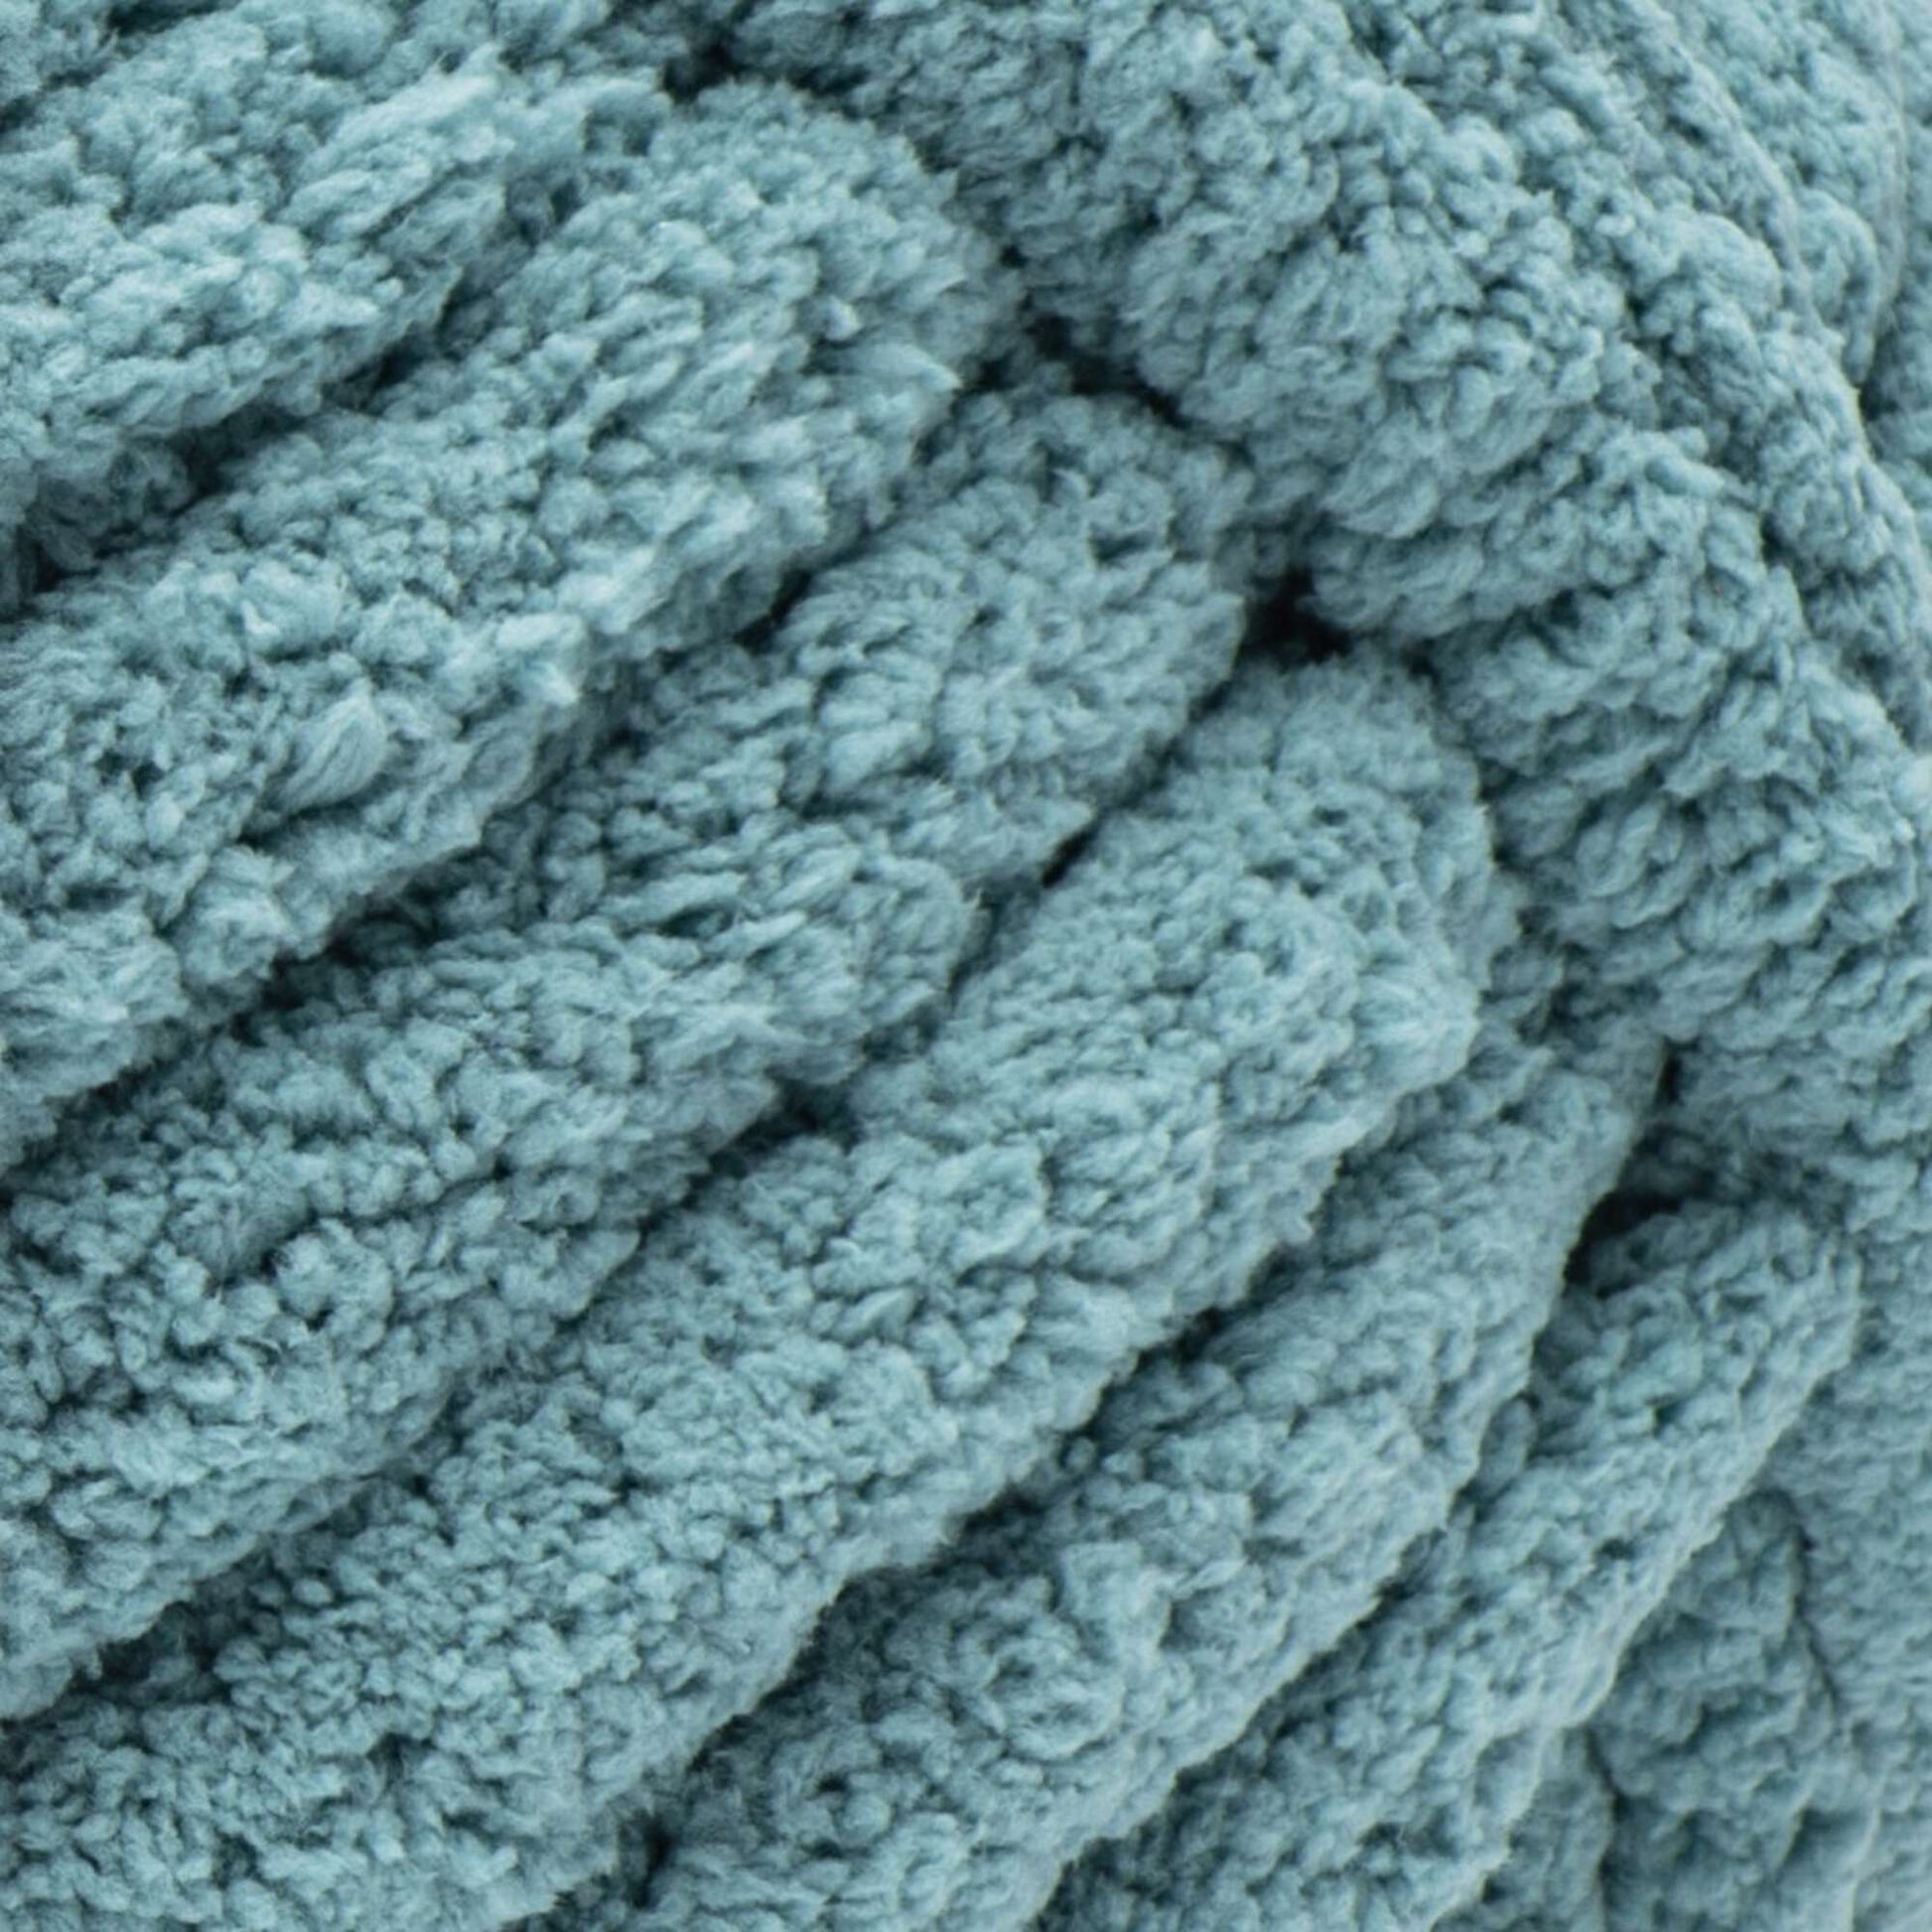 Bernat Blanket Extra Thick Yarn (600g/21.2oz) Teal Moss